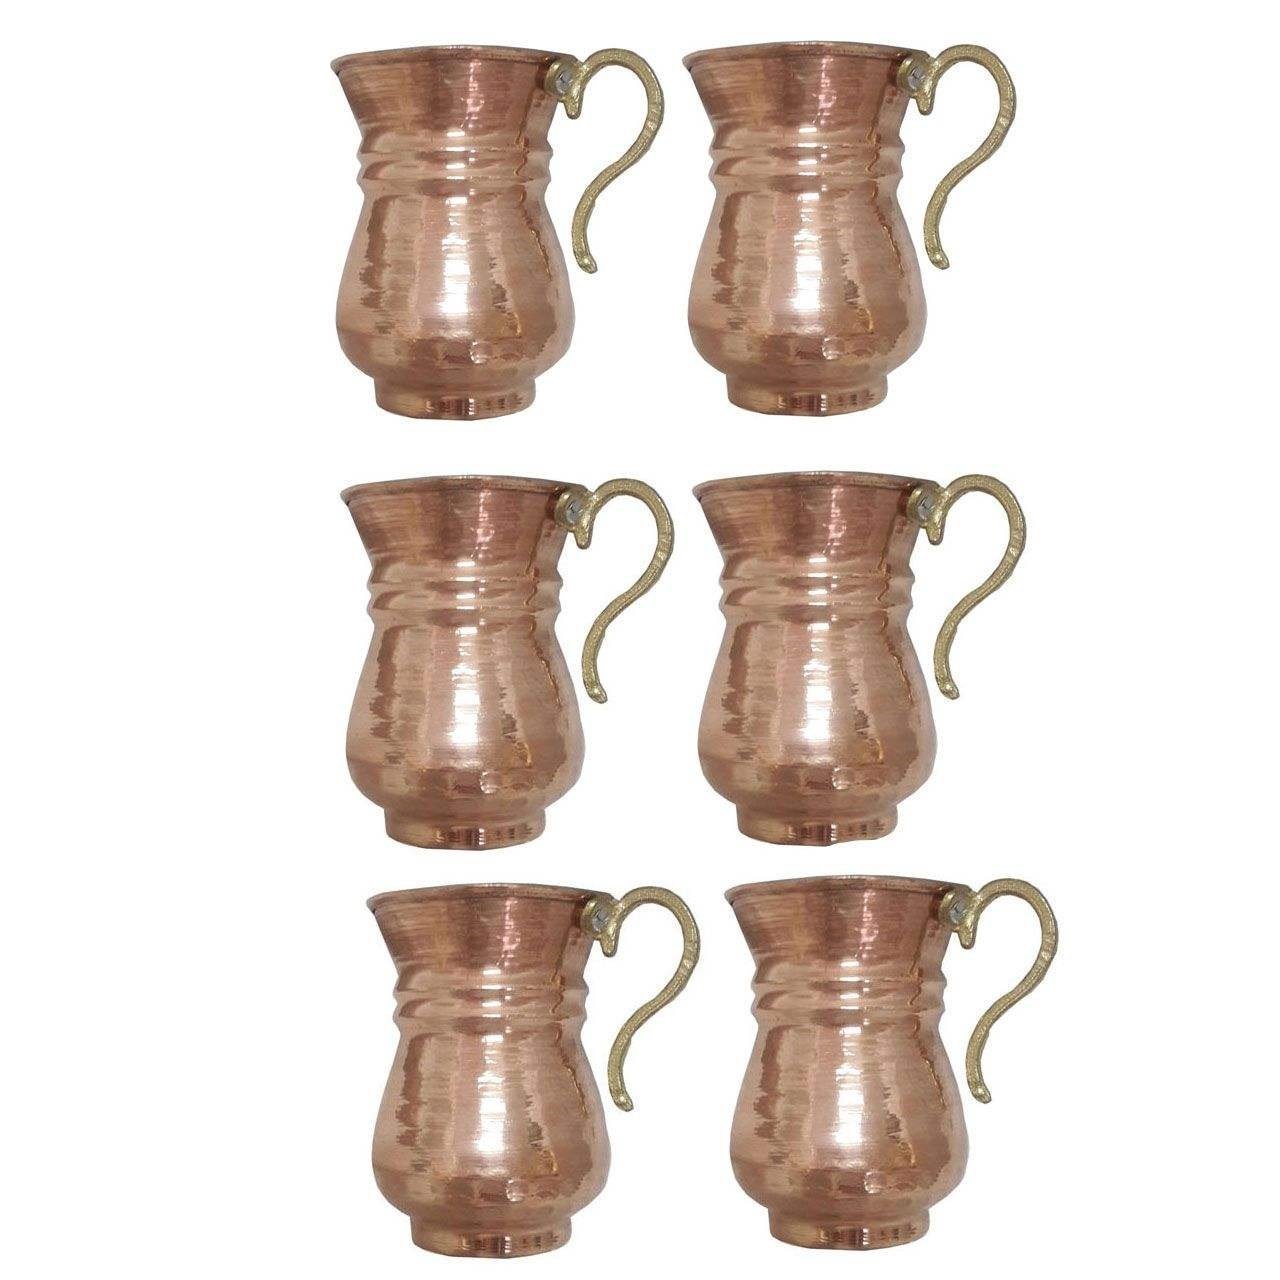 Handicraft Copper glass 6 pcs Code 22,price of copper glasess,price of copper spoon,price of copper pot